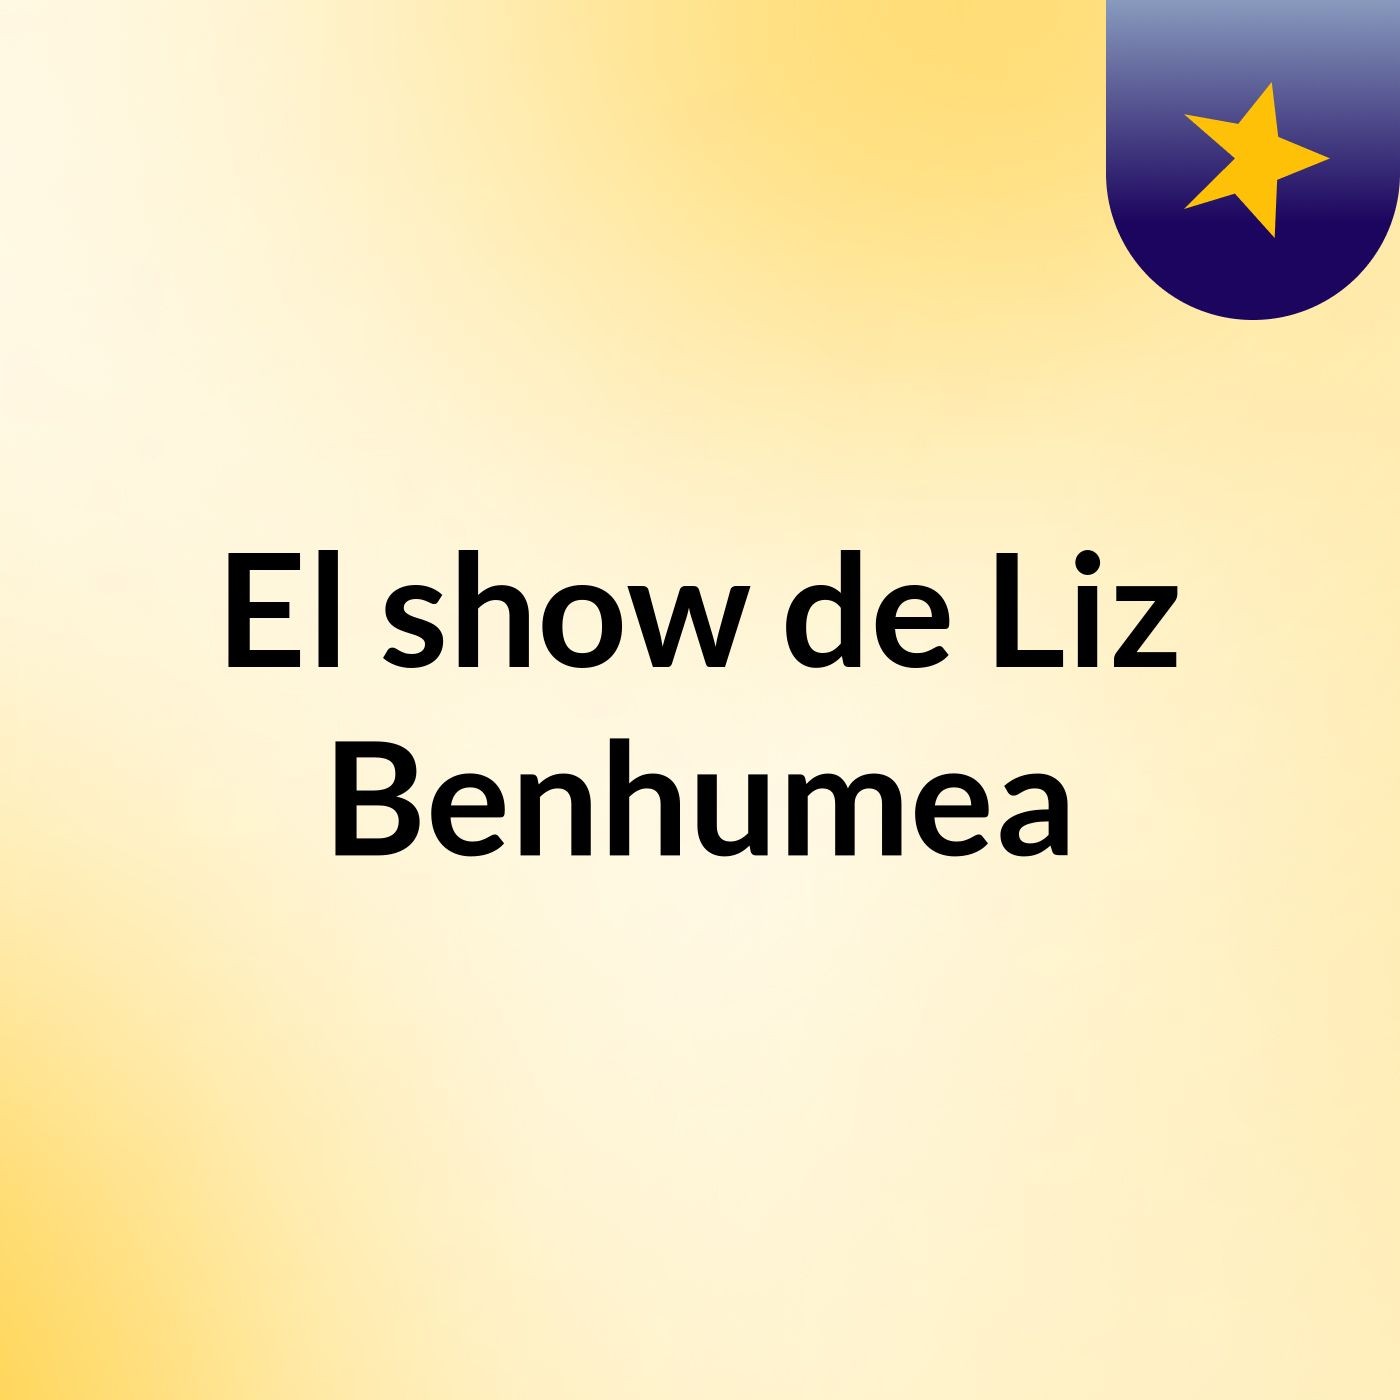 El show de Liz Benhumea